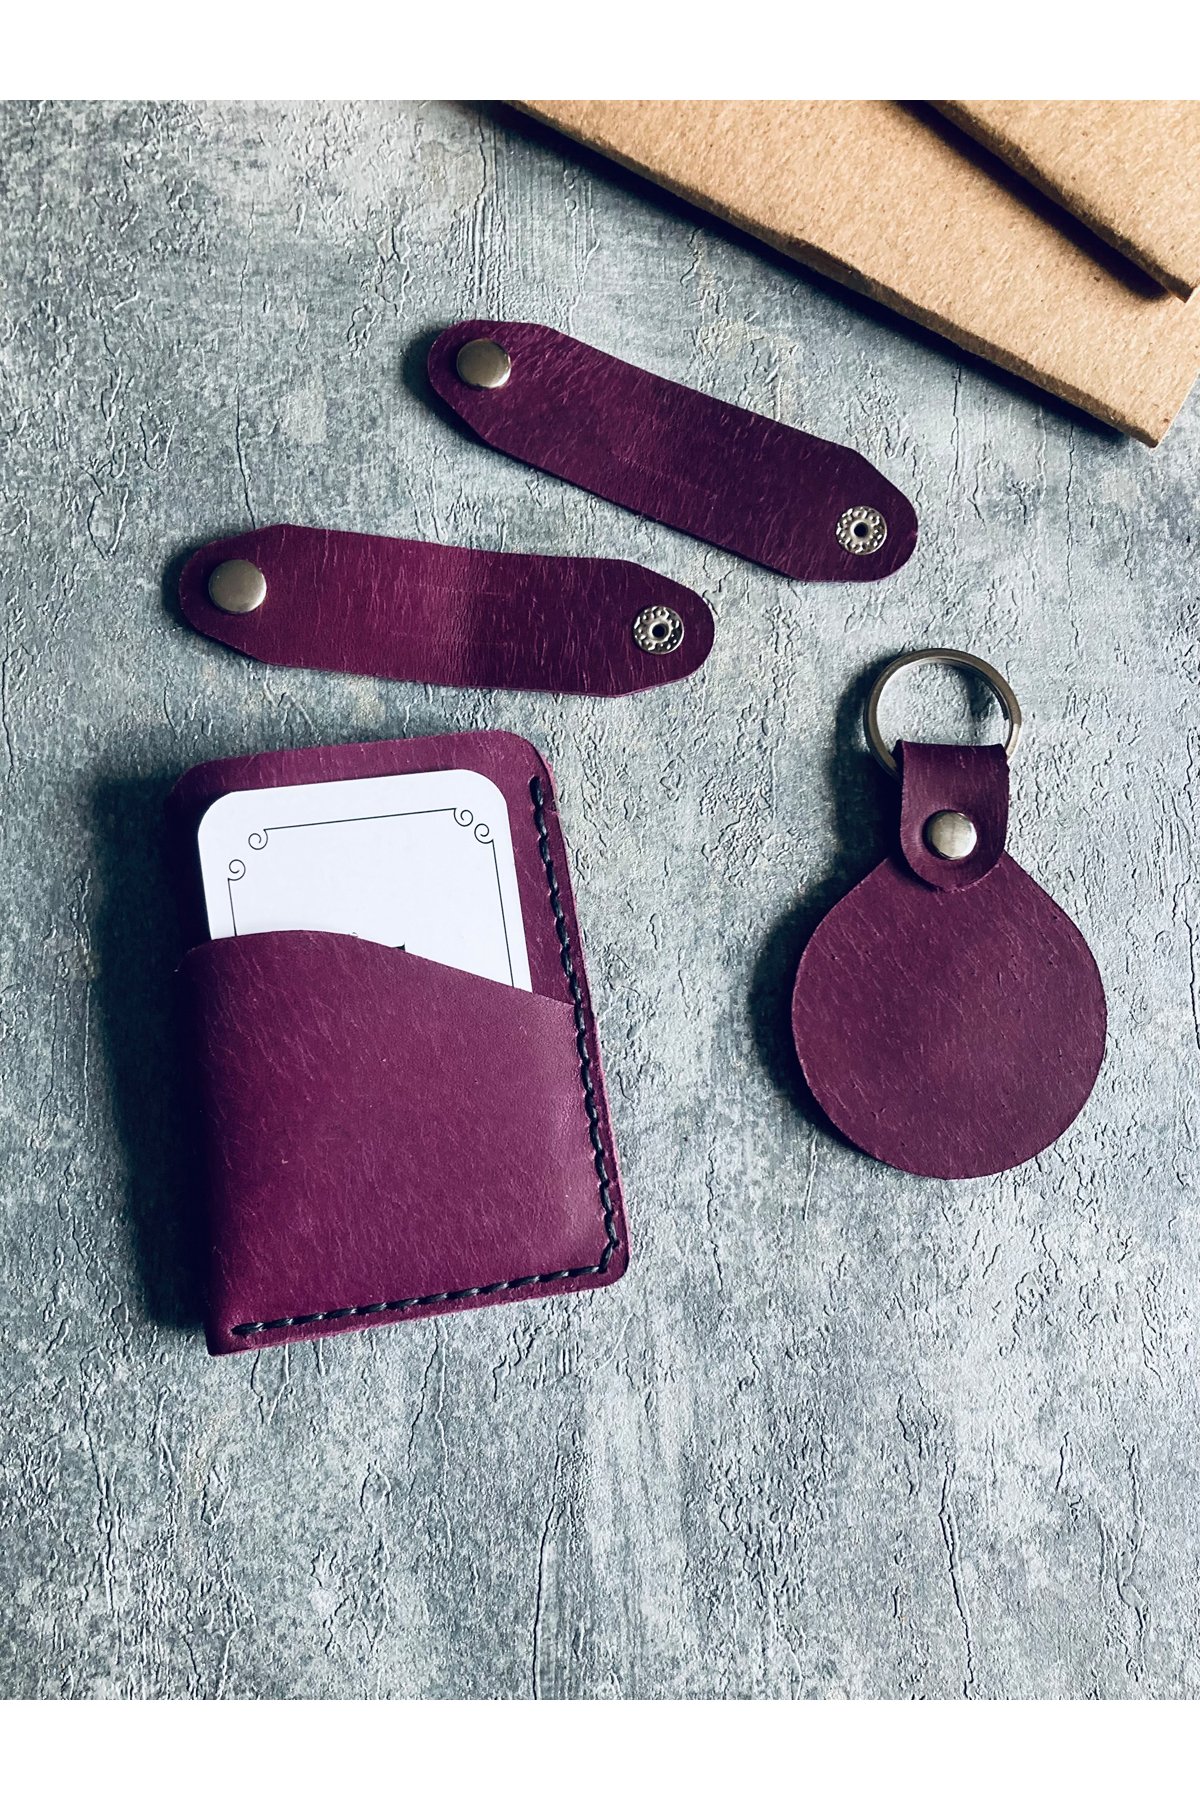 Set of 4 Palm Card Holders - Purple Leather | Bretya Leather